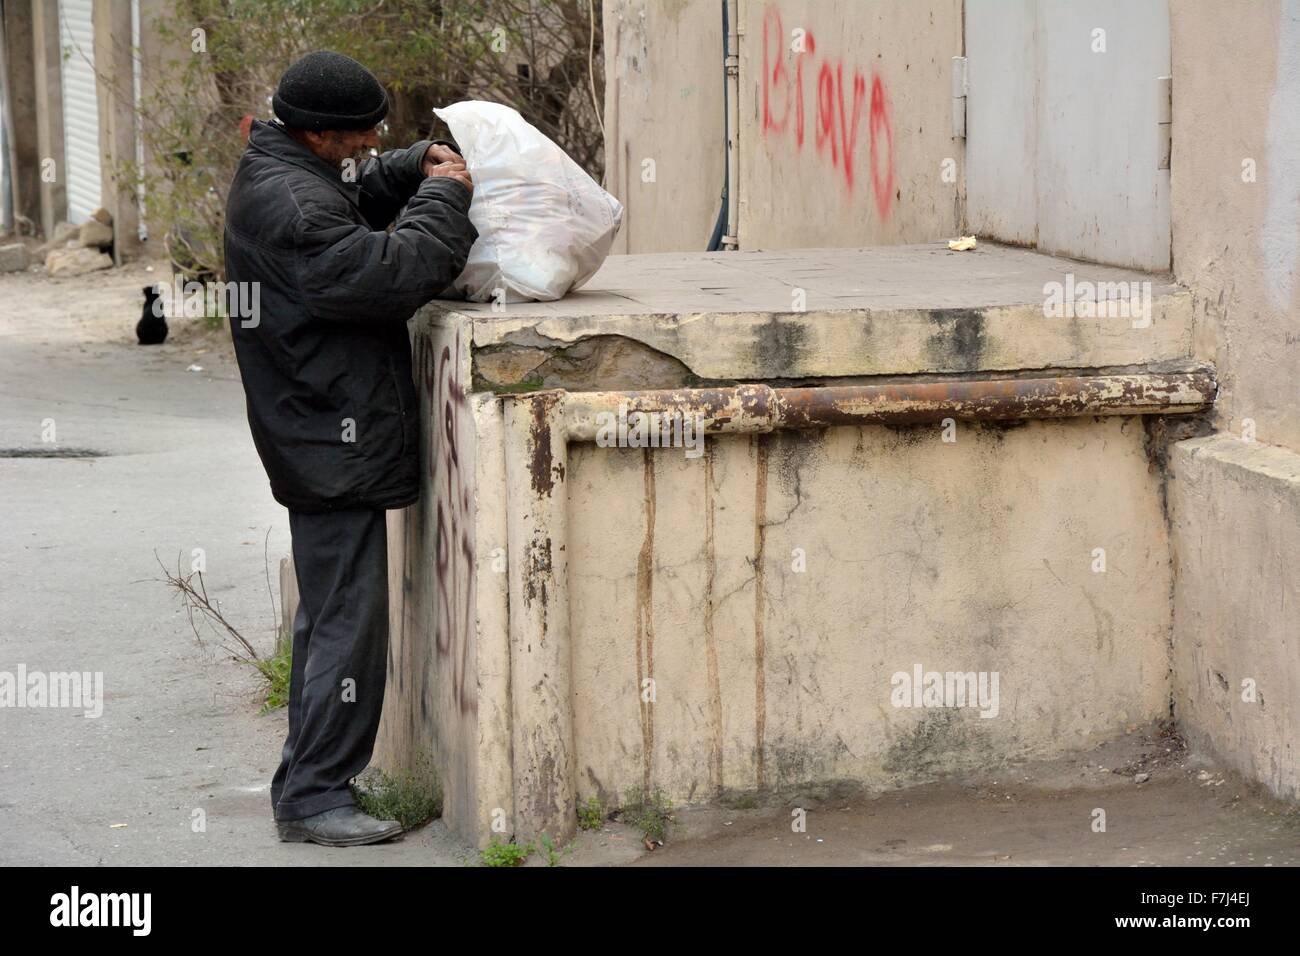 BAKU, AZERBAIJAN - 14 NOVEMBER 2013 Homeless man looking for food in rubbish in Baku, capital of Azerbaijan Stock Photo